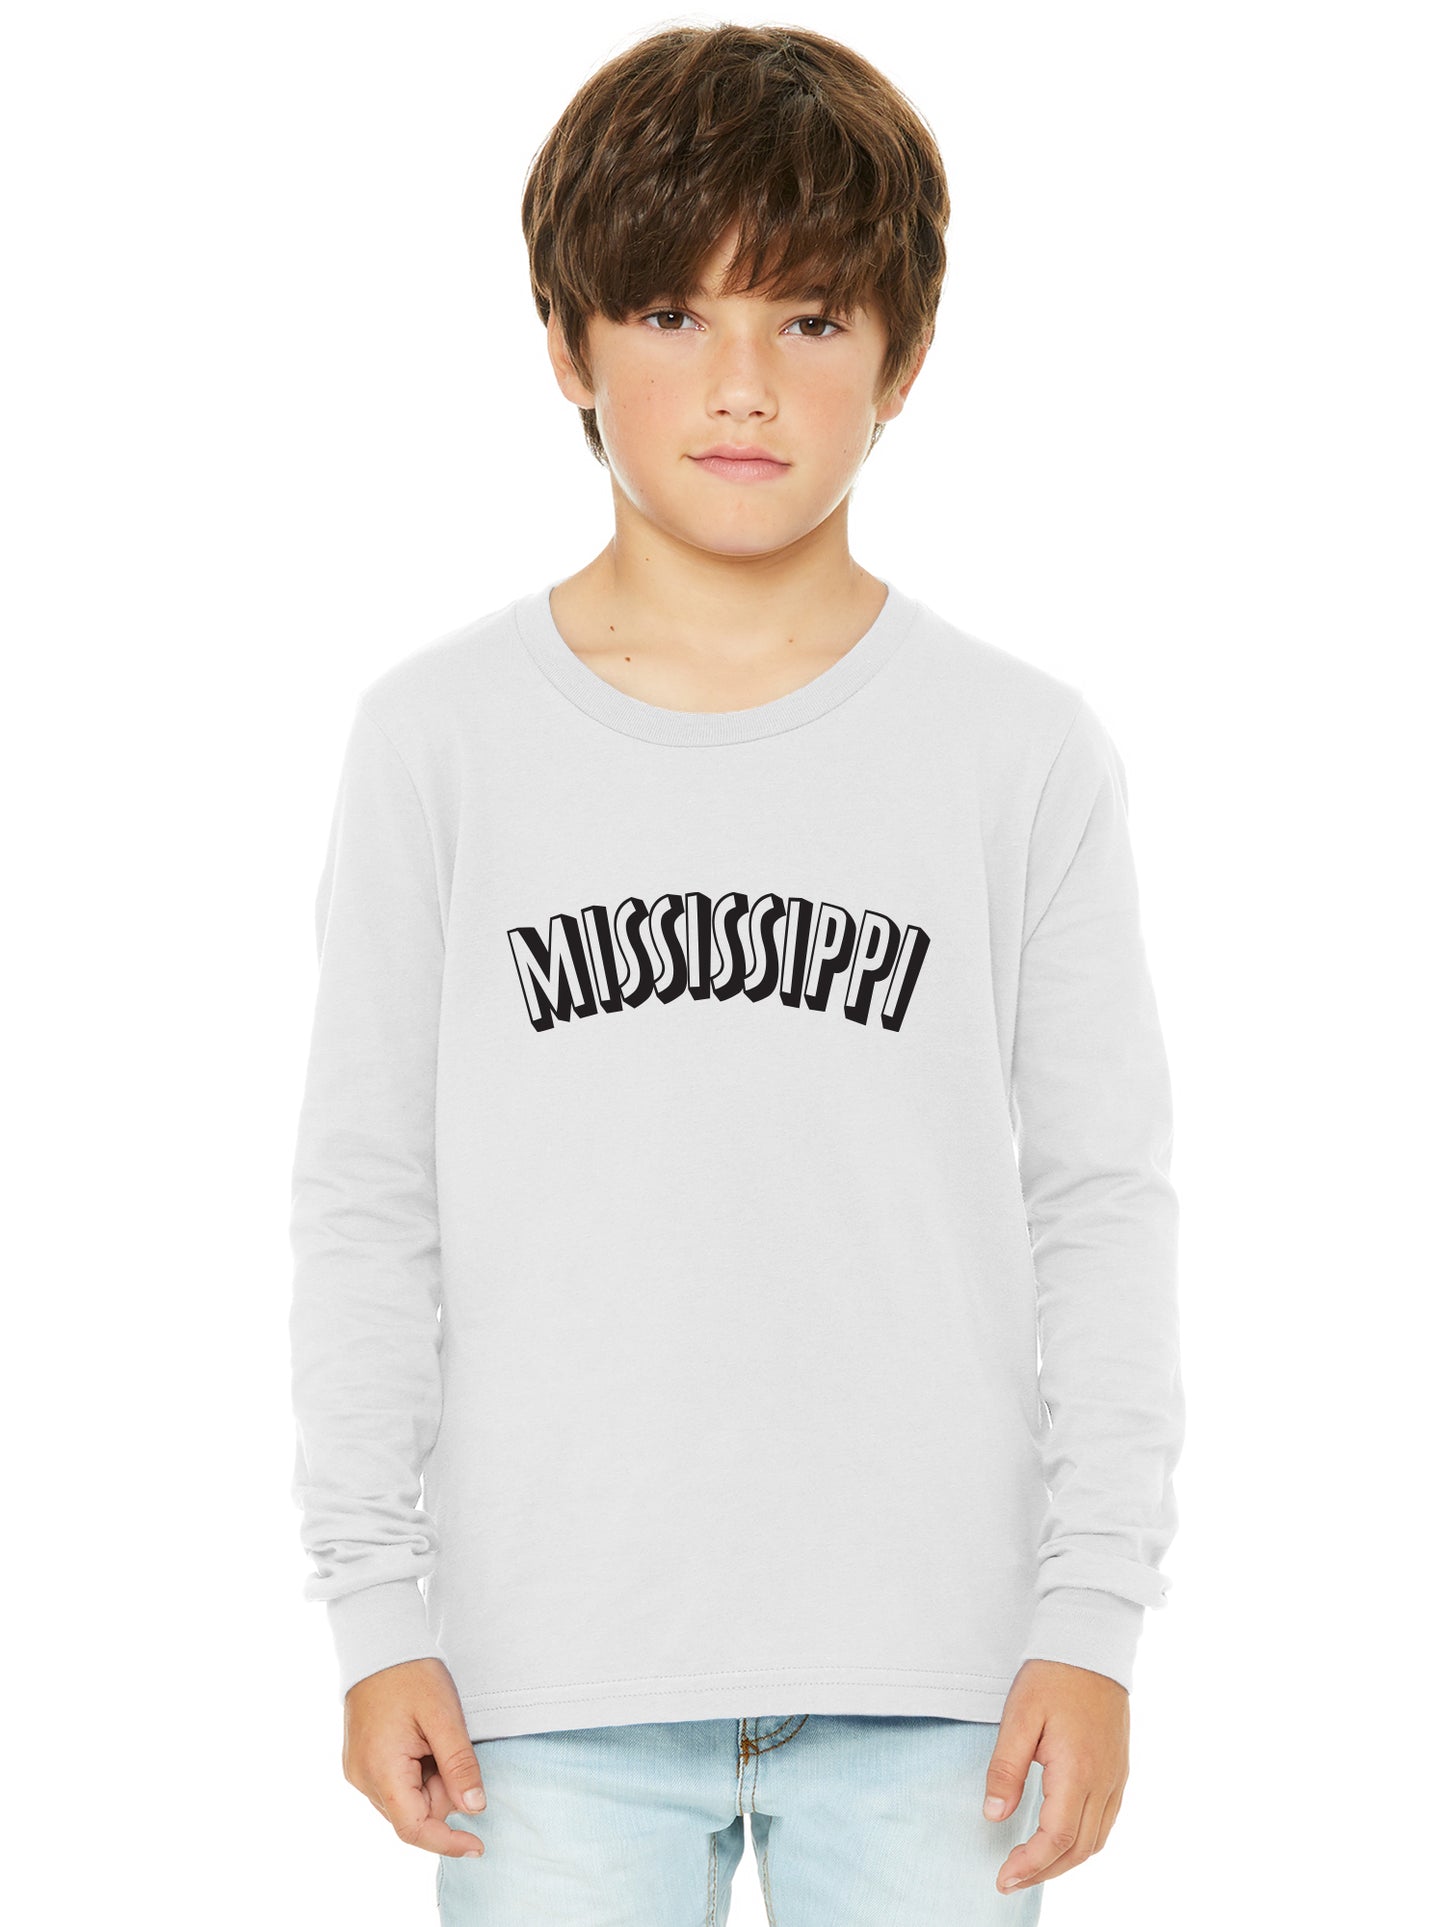 Daxton Youth Long Sleeve Mississippi Basic Tshirt